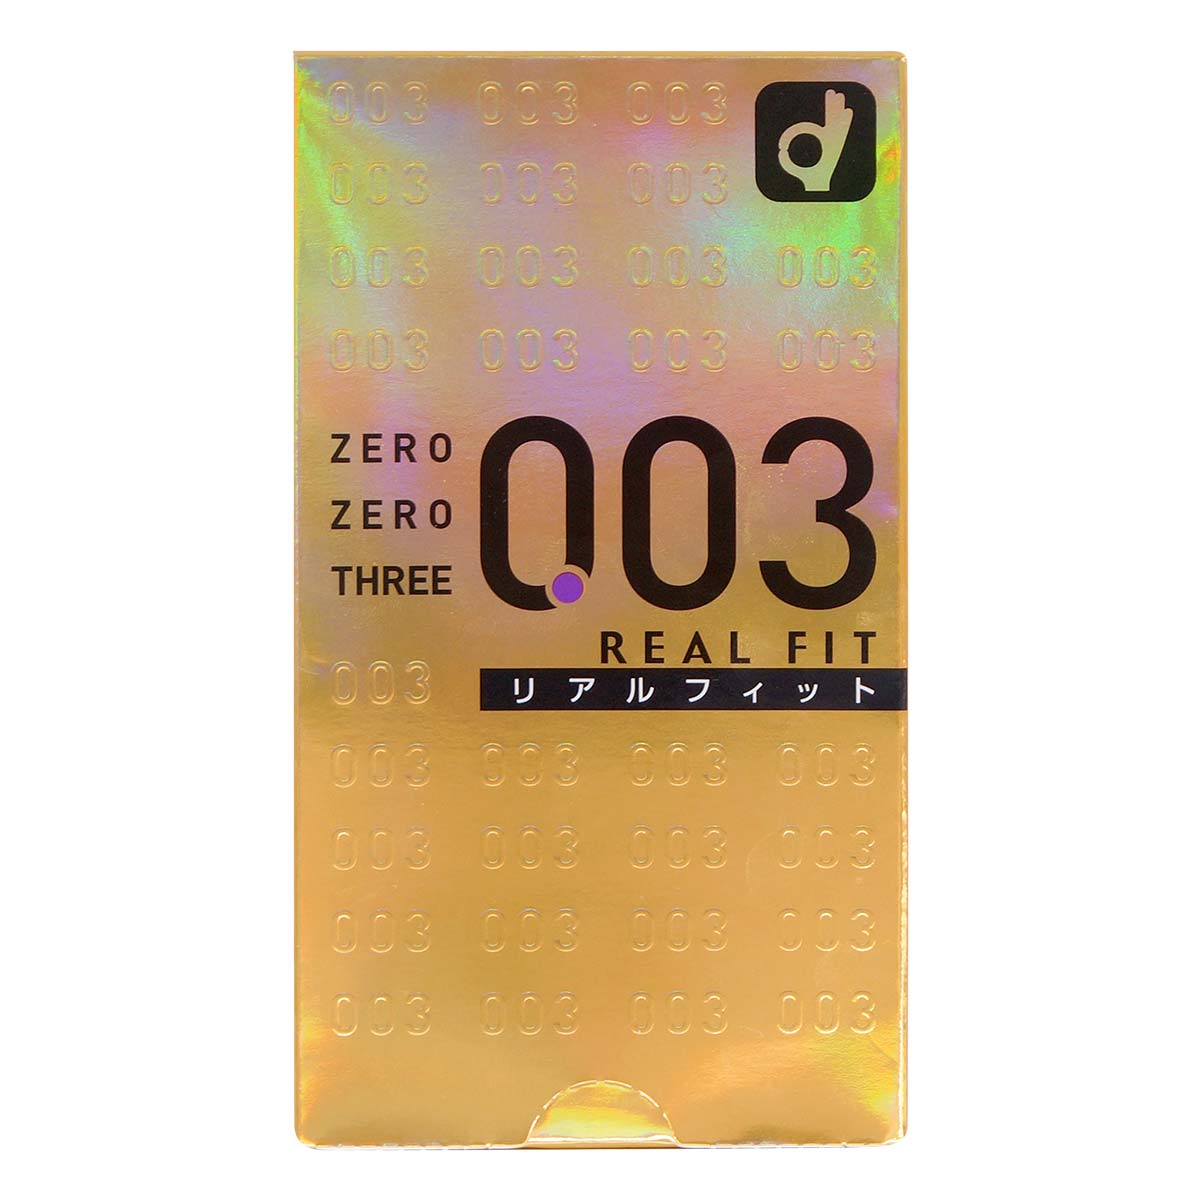 Zero Zero Three 0.03 Real Fit (Japan Edition) 10's Pack Latex Condom-p_2